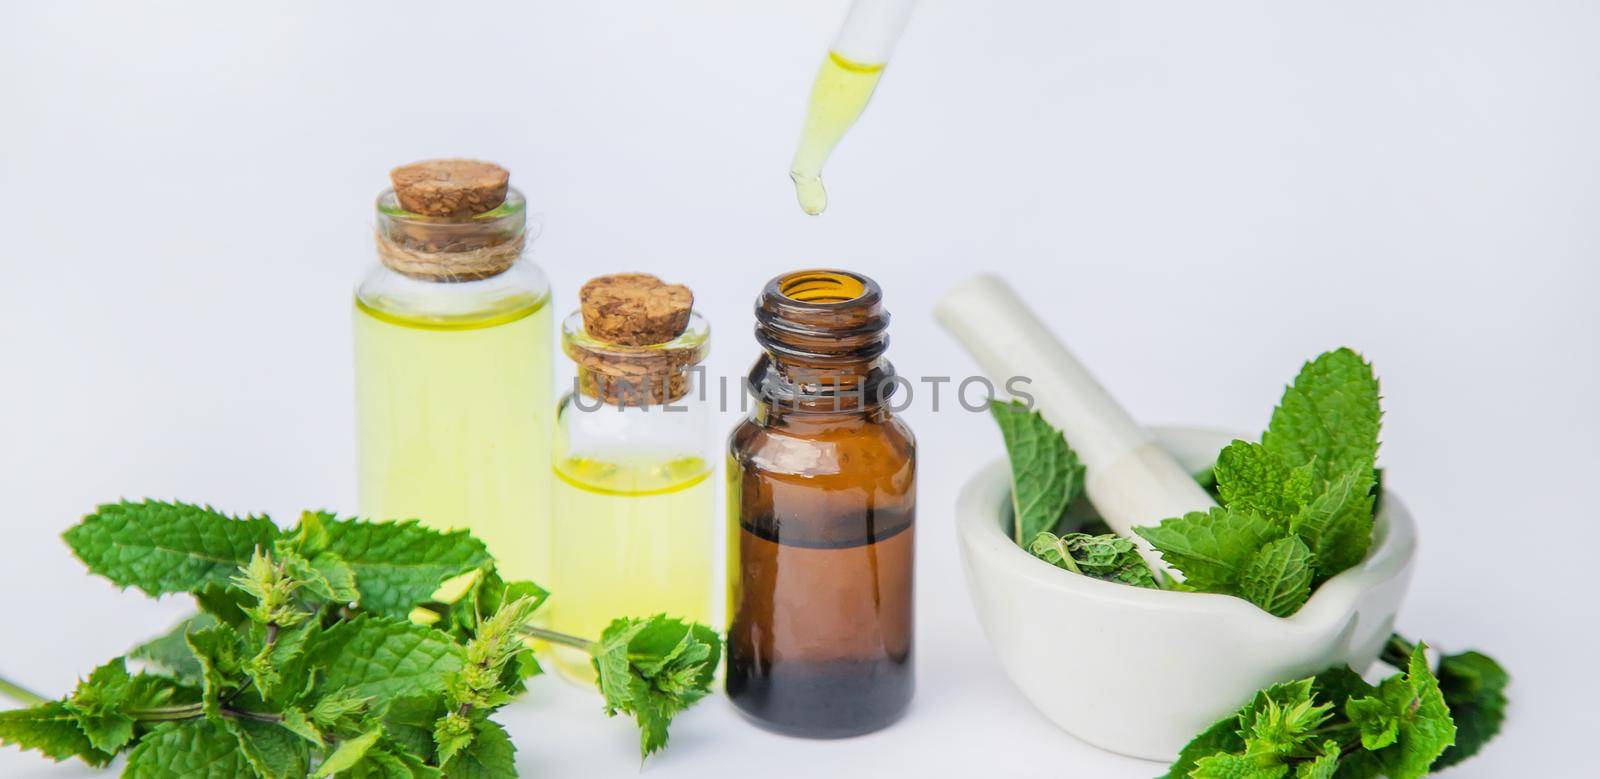 medicinal herbs. Selective focus. medicine and health. by yanadjana